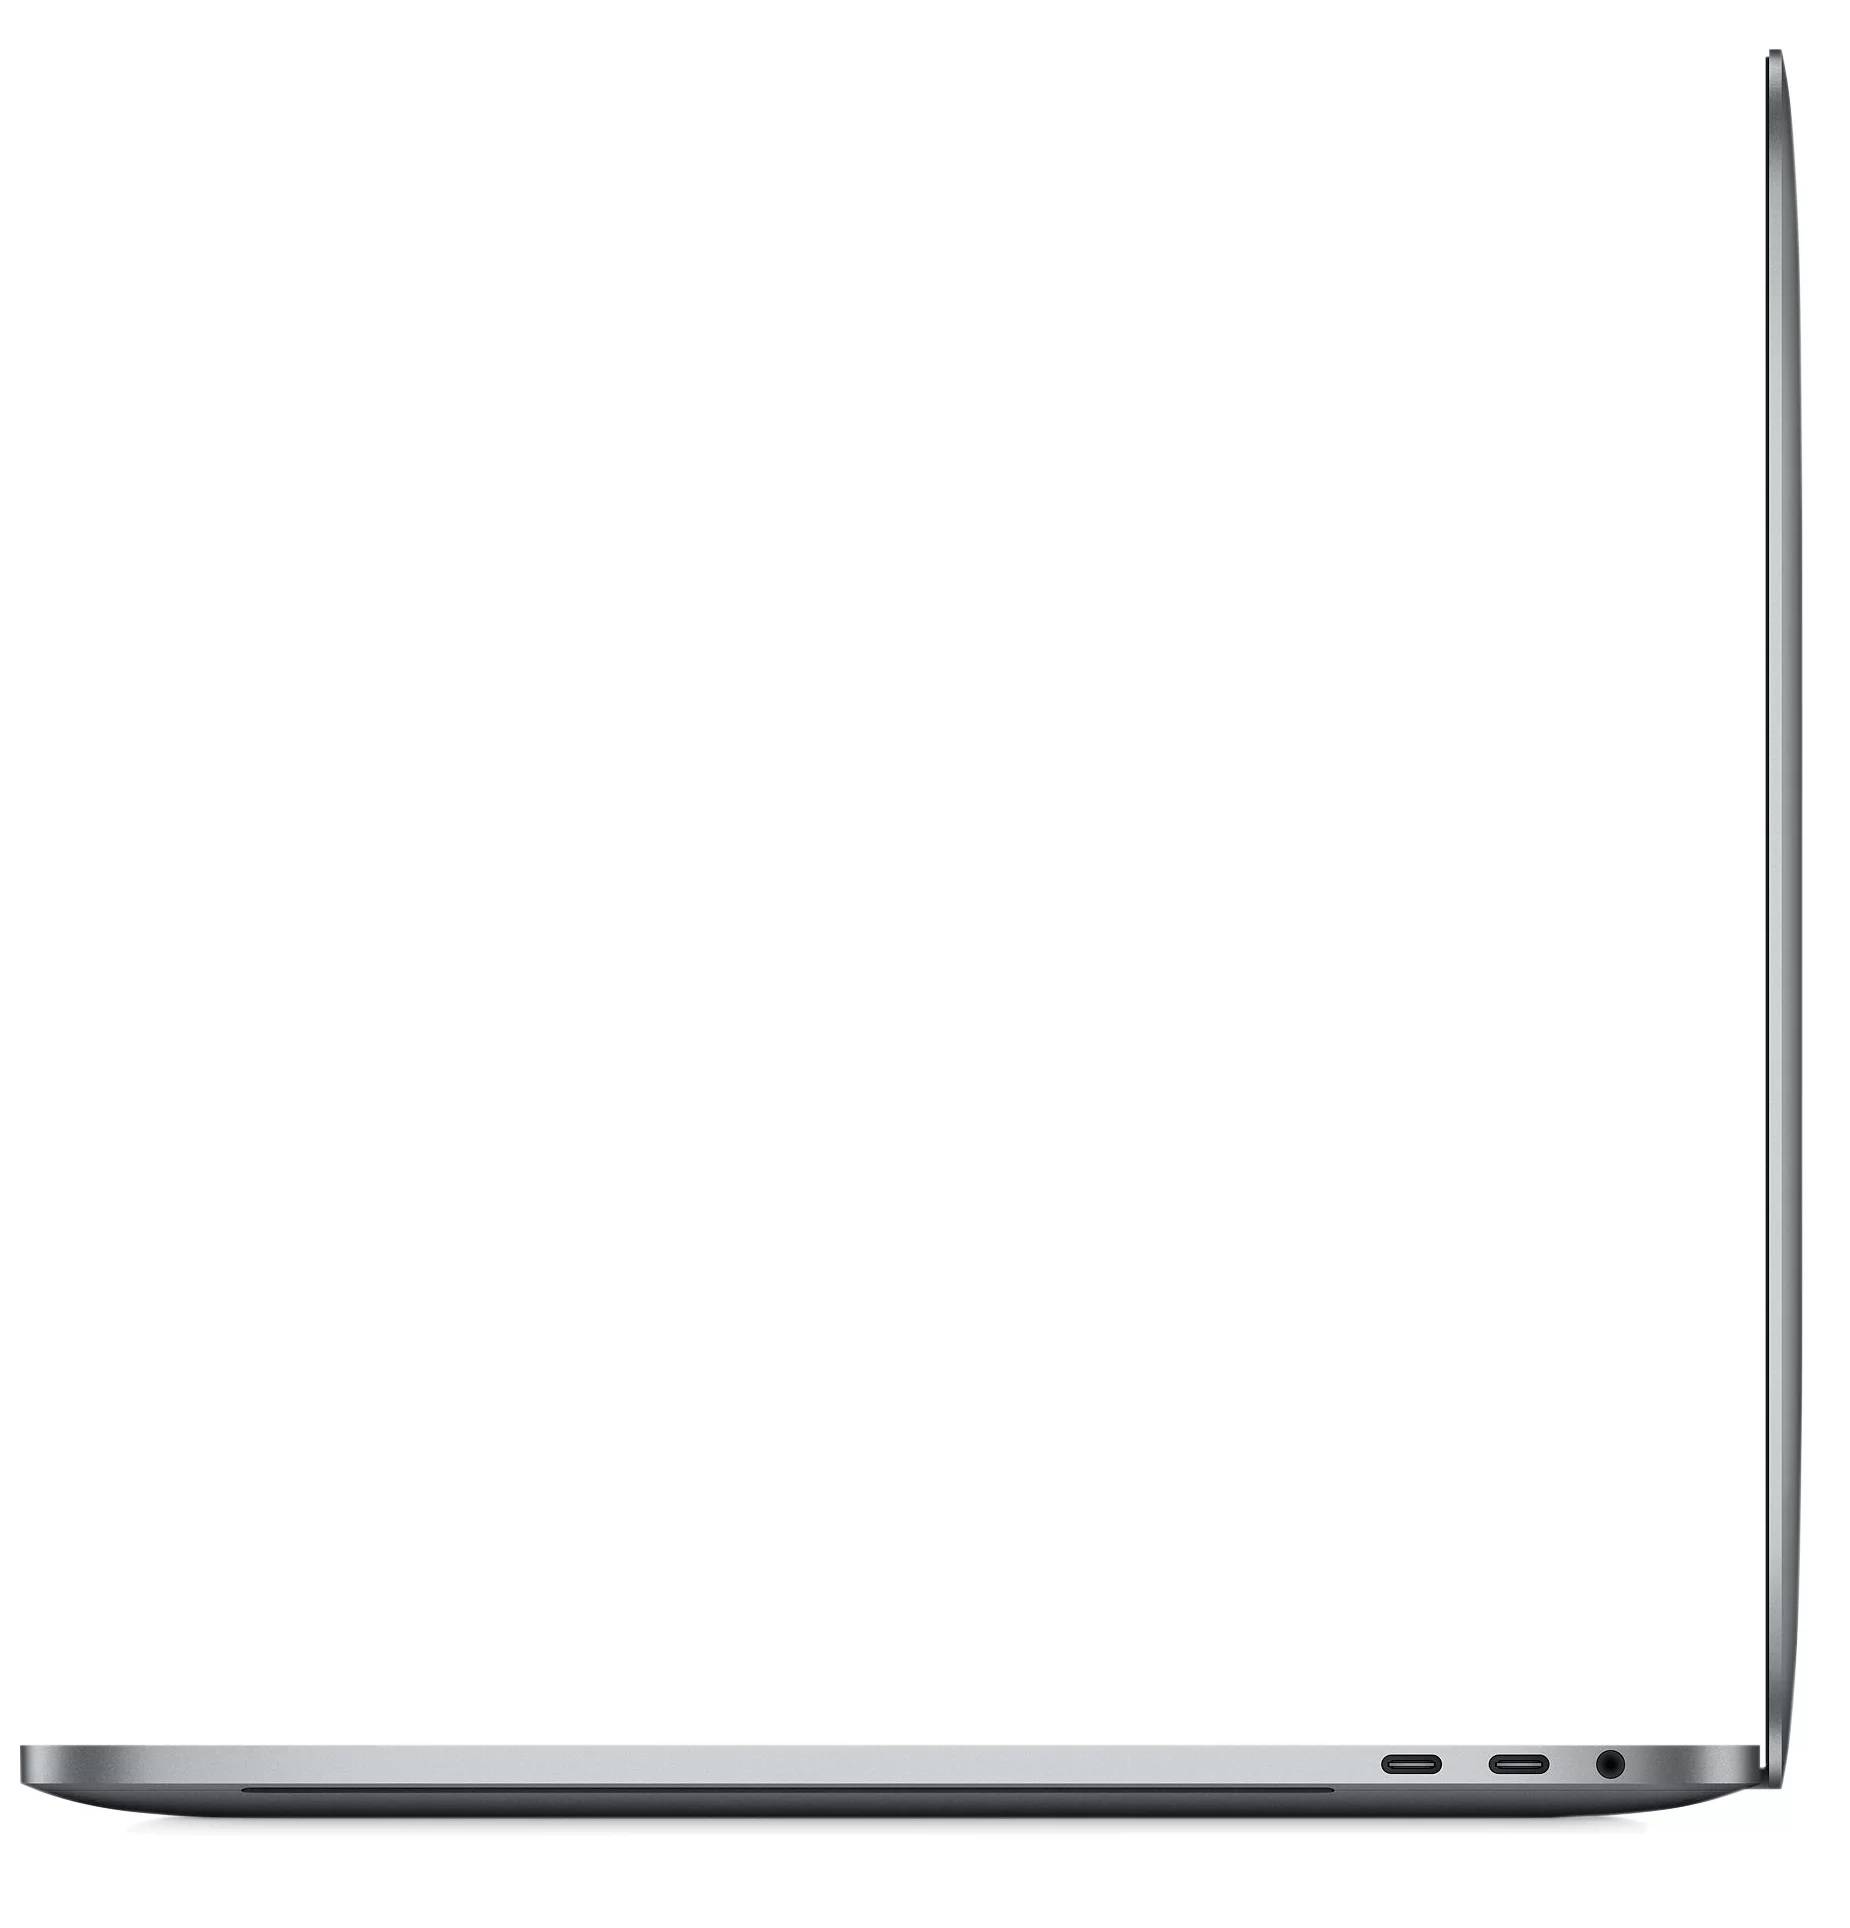 Macbook pro 13 with retina display price in qatar soulfly logo